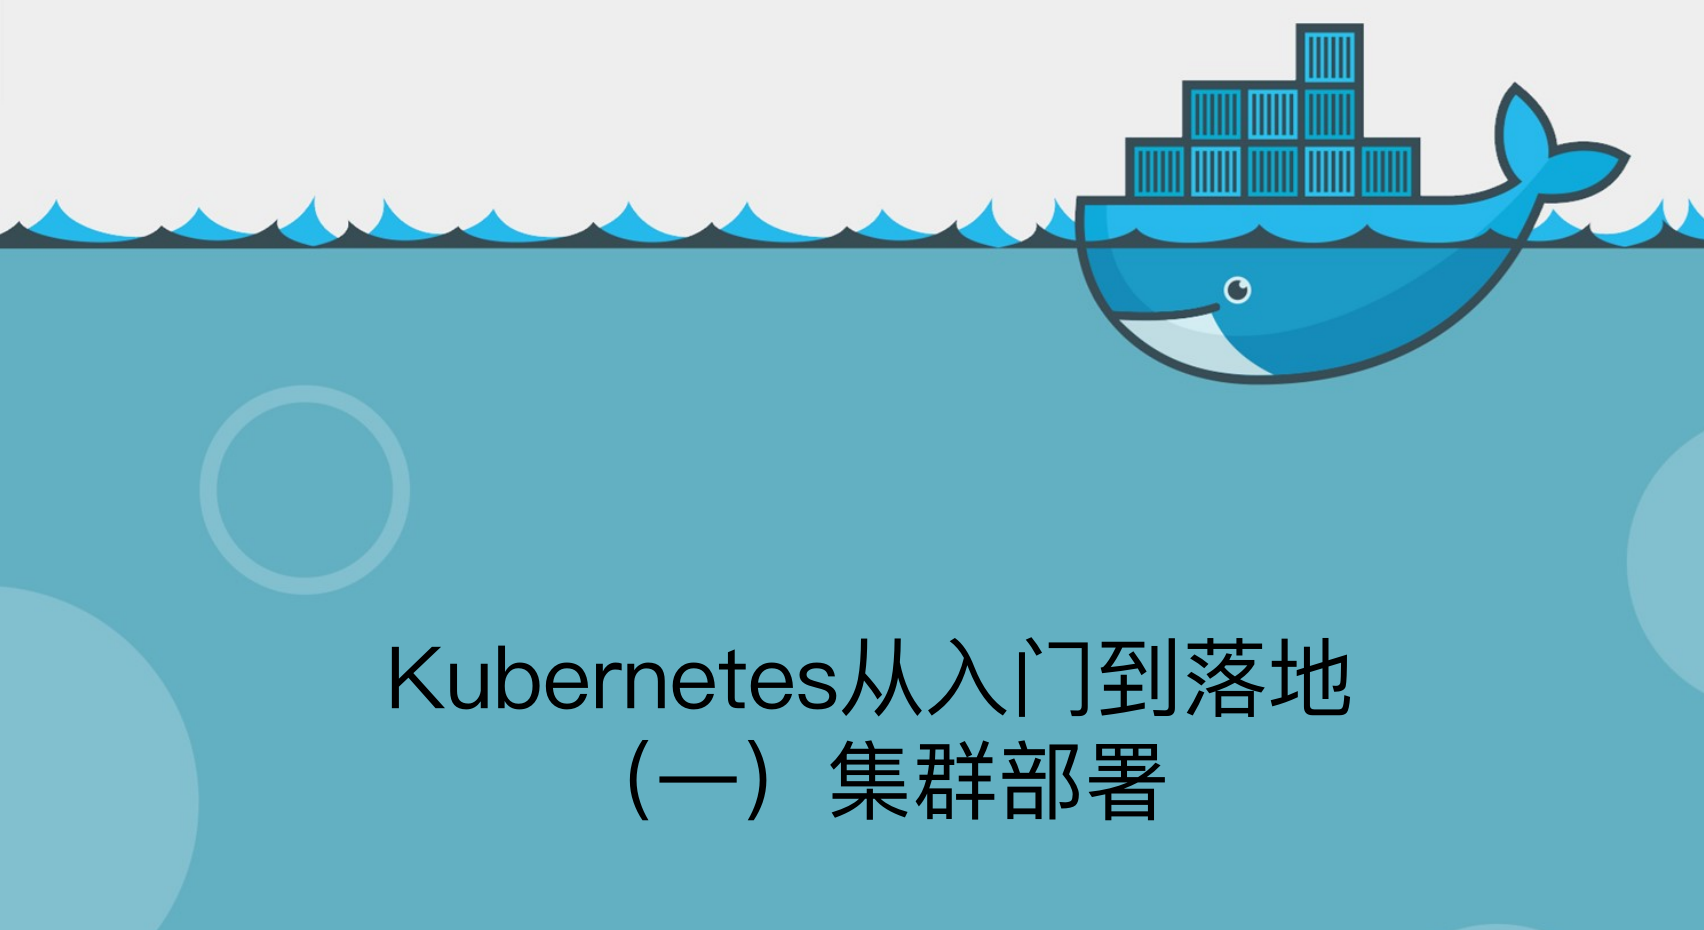 Kubernetes/k8s从基础到落地系列课程 （一）集群部署